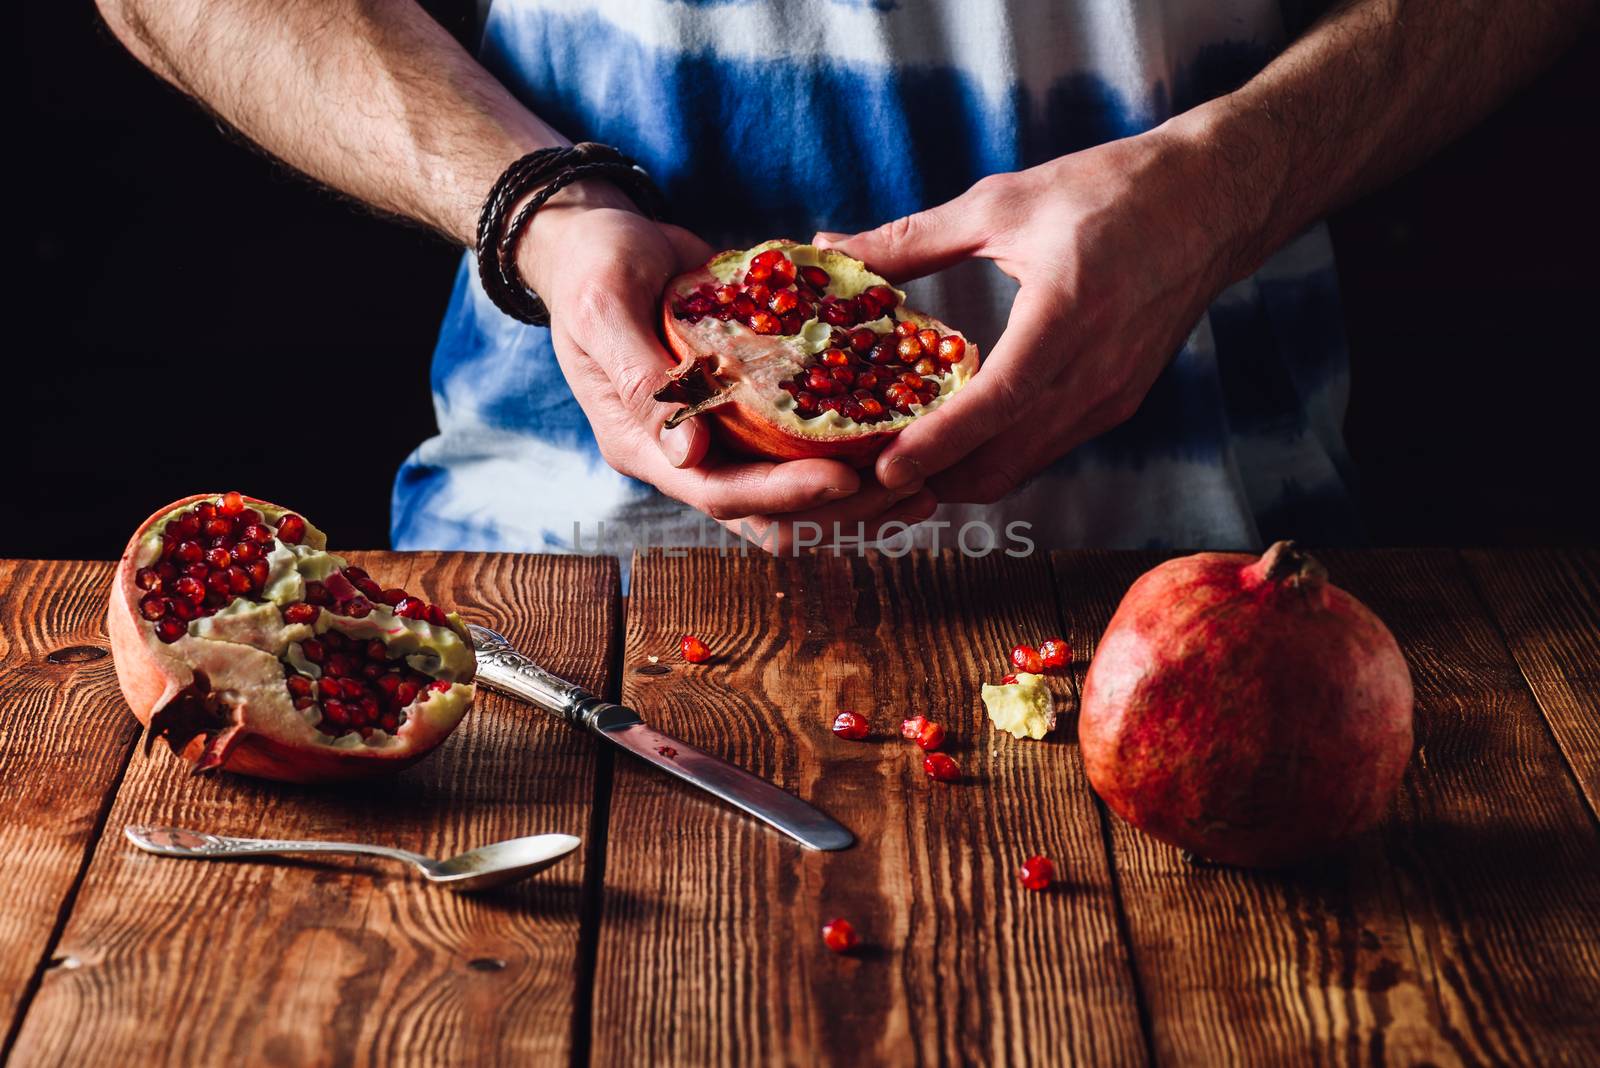 Pomegranate Half in the Hands by Seva_blsv